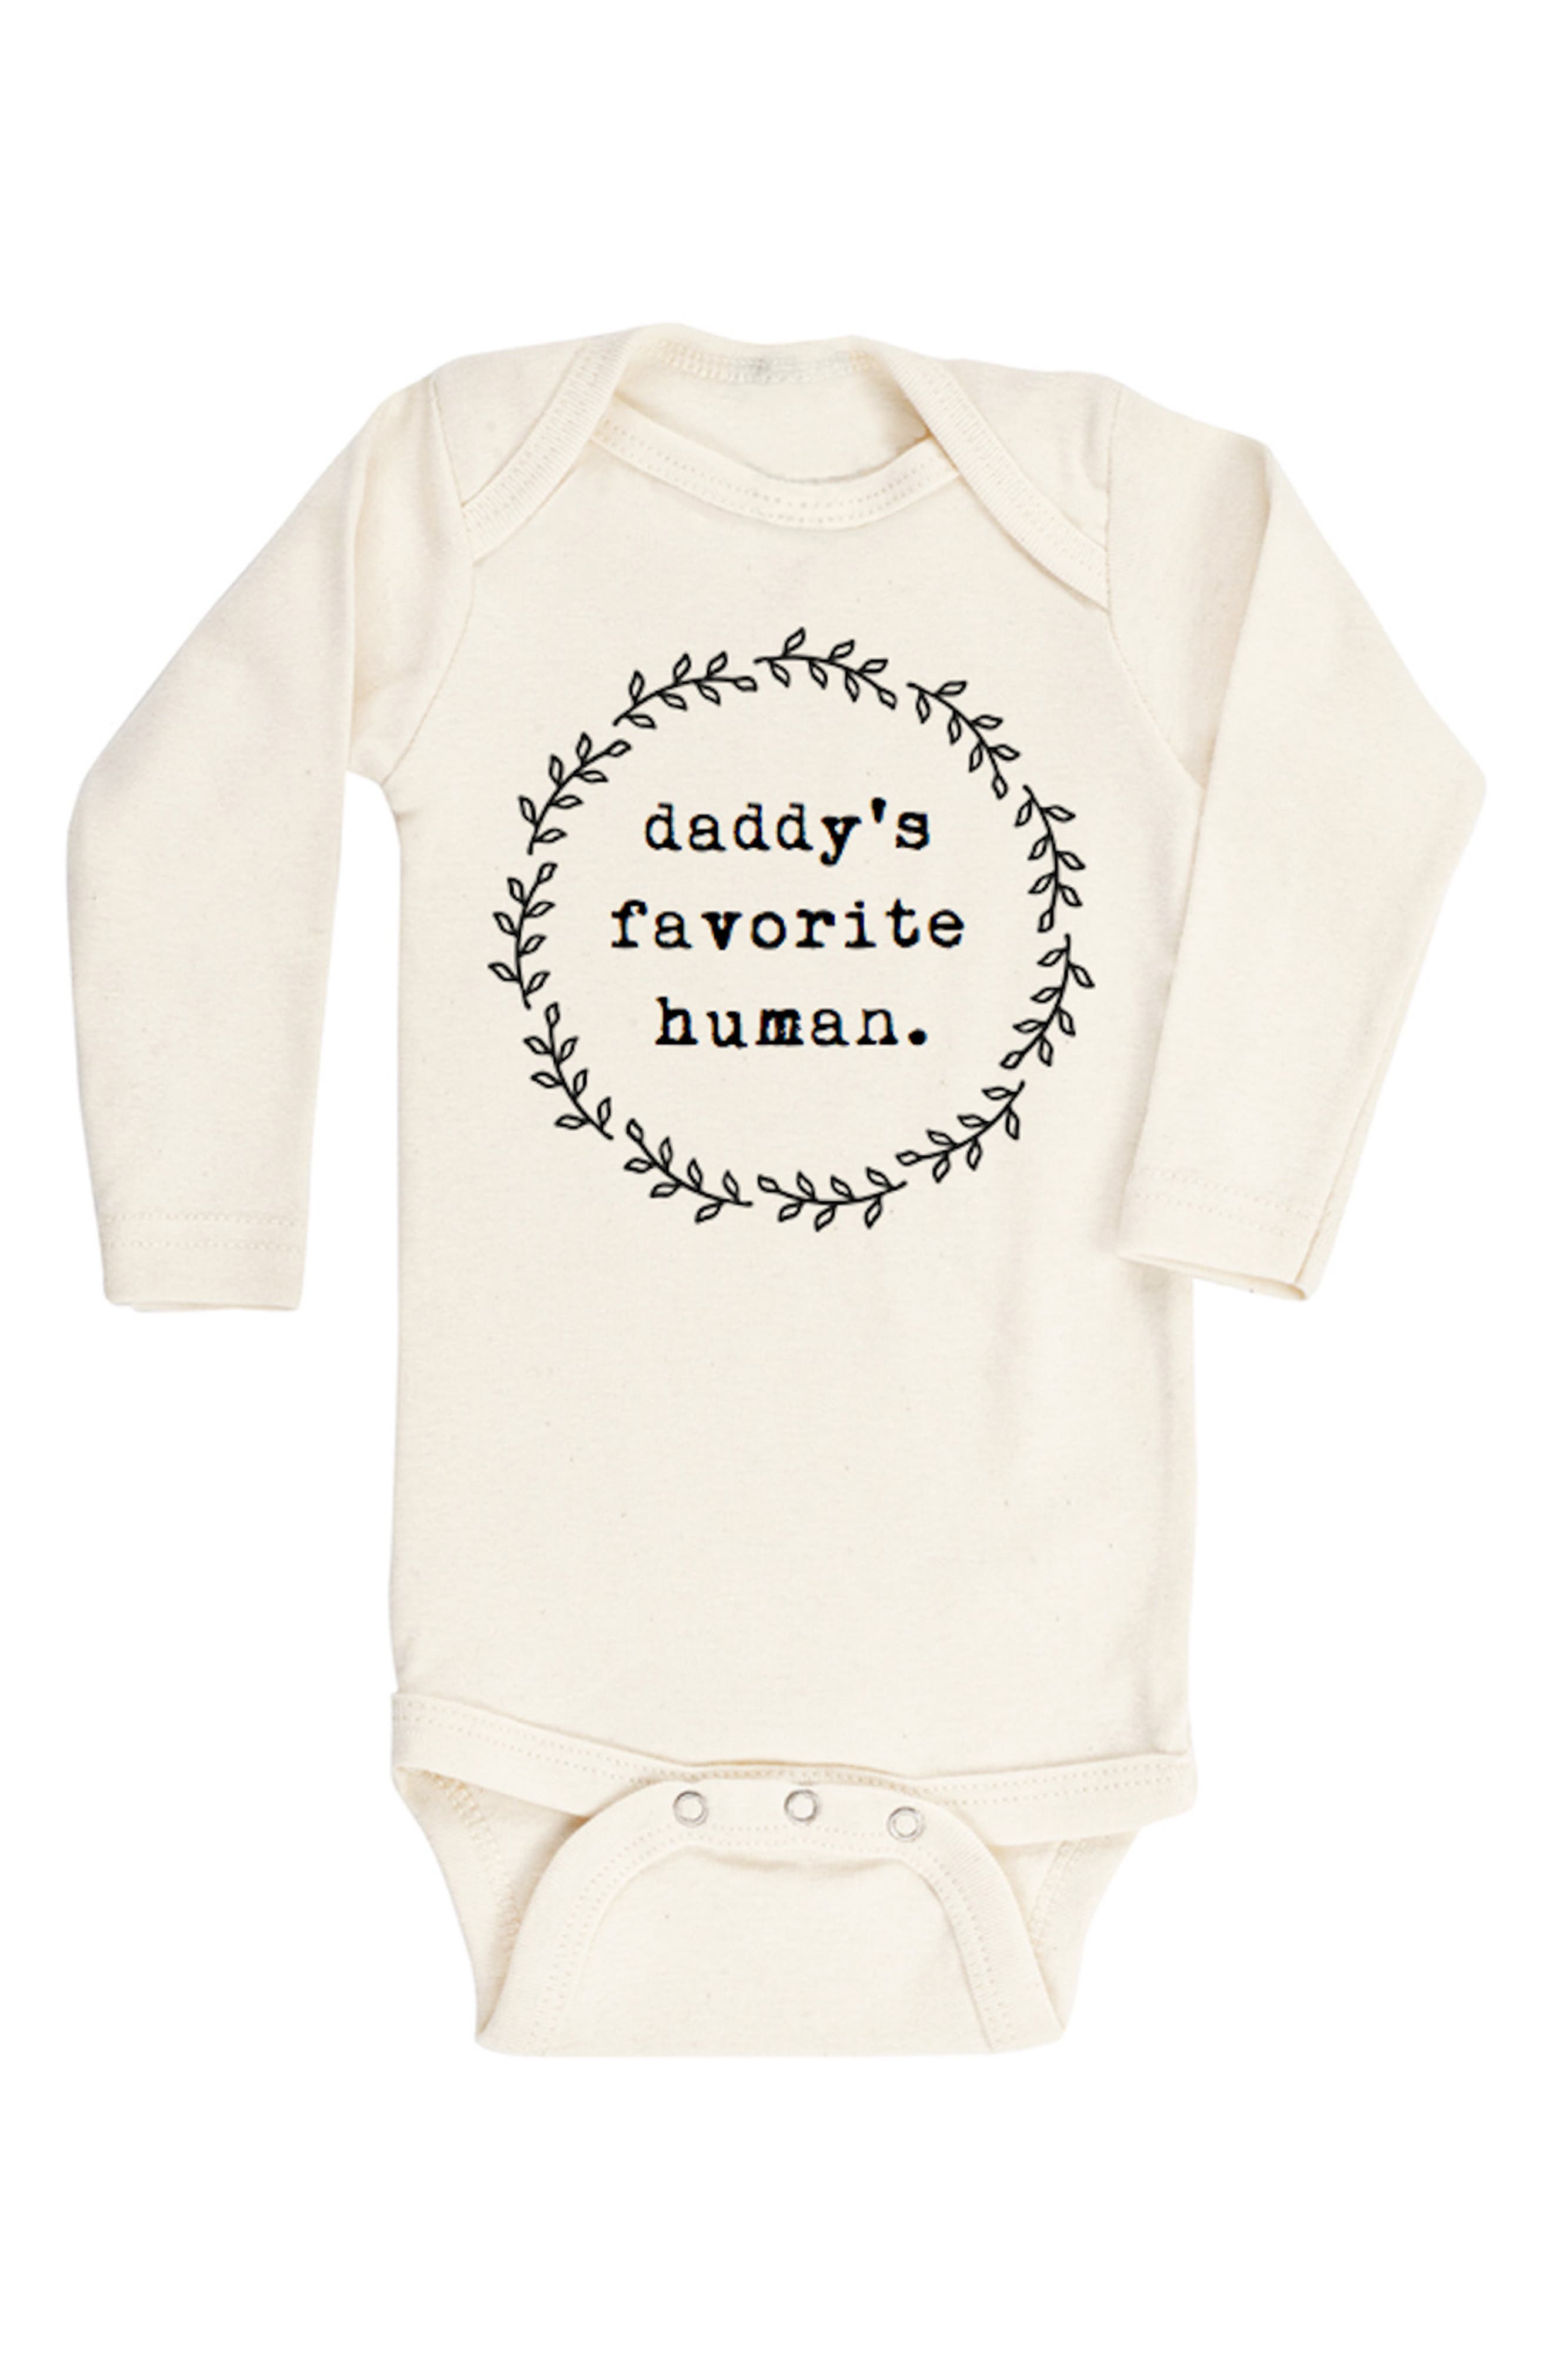 nordstrom newborn baby girl clothes